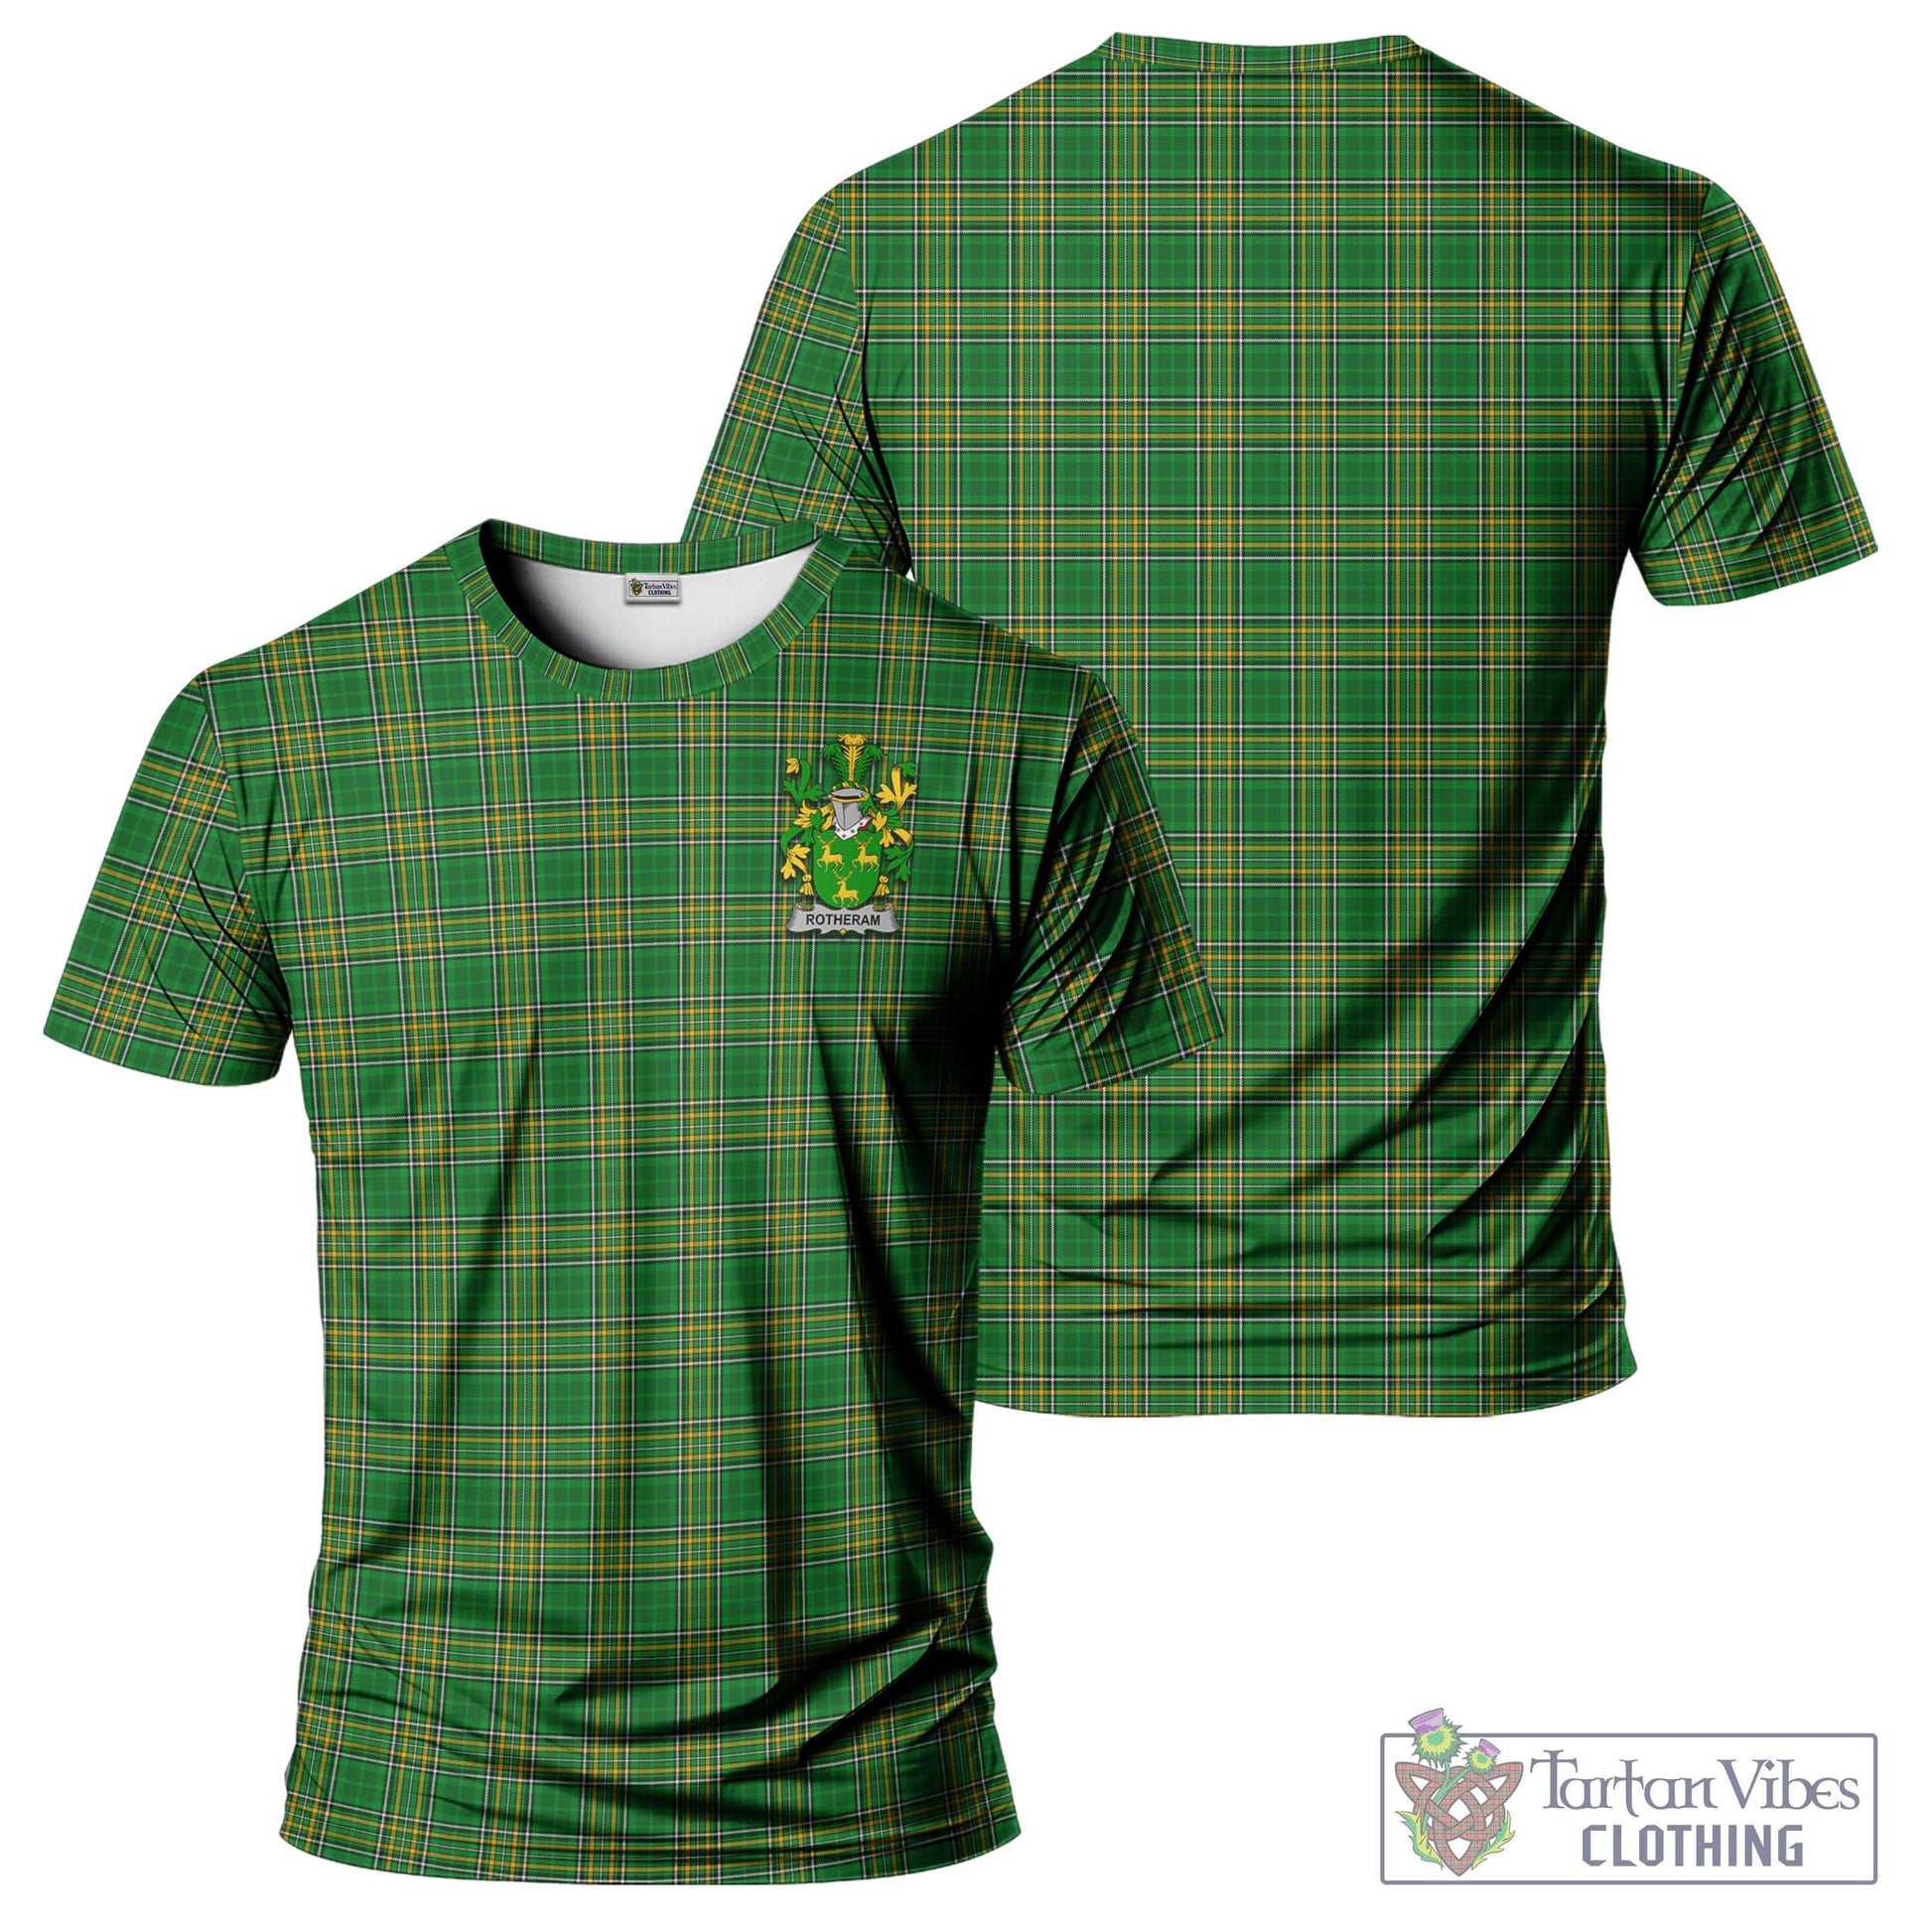 Tartan Vibes Clothing Rotheram Ireland Clan Tartan T-Shirt with Family Seal